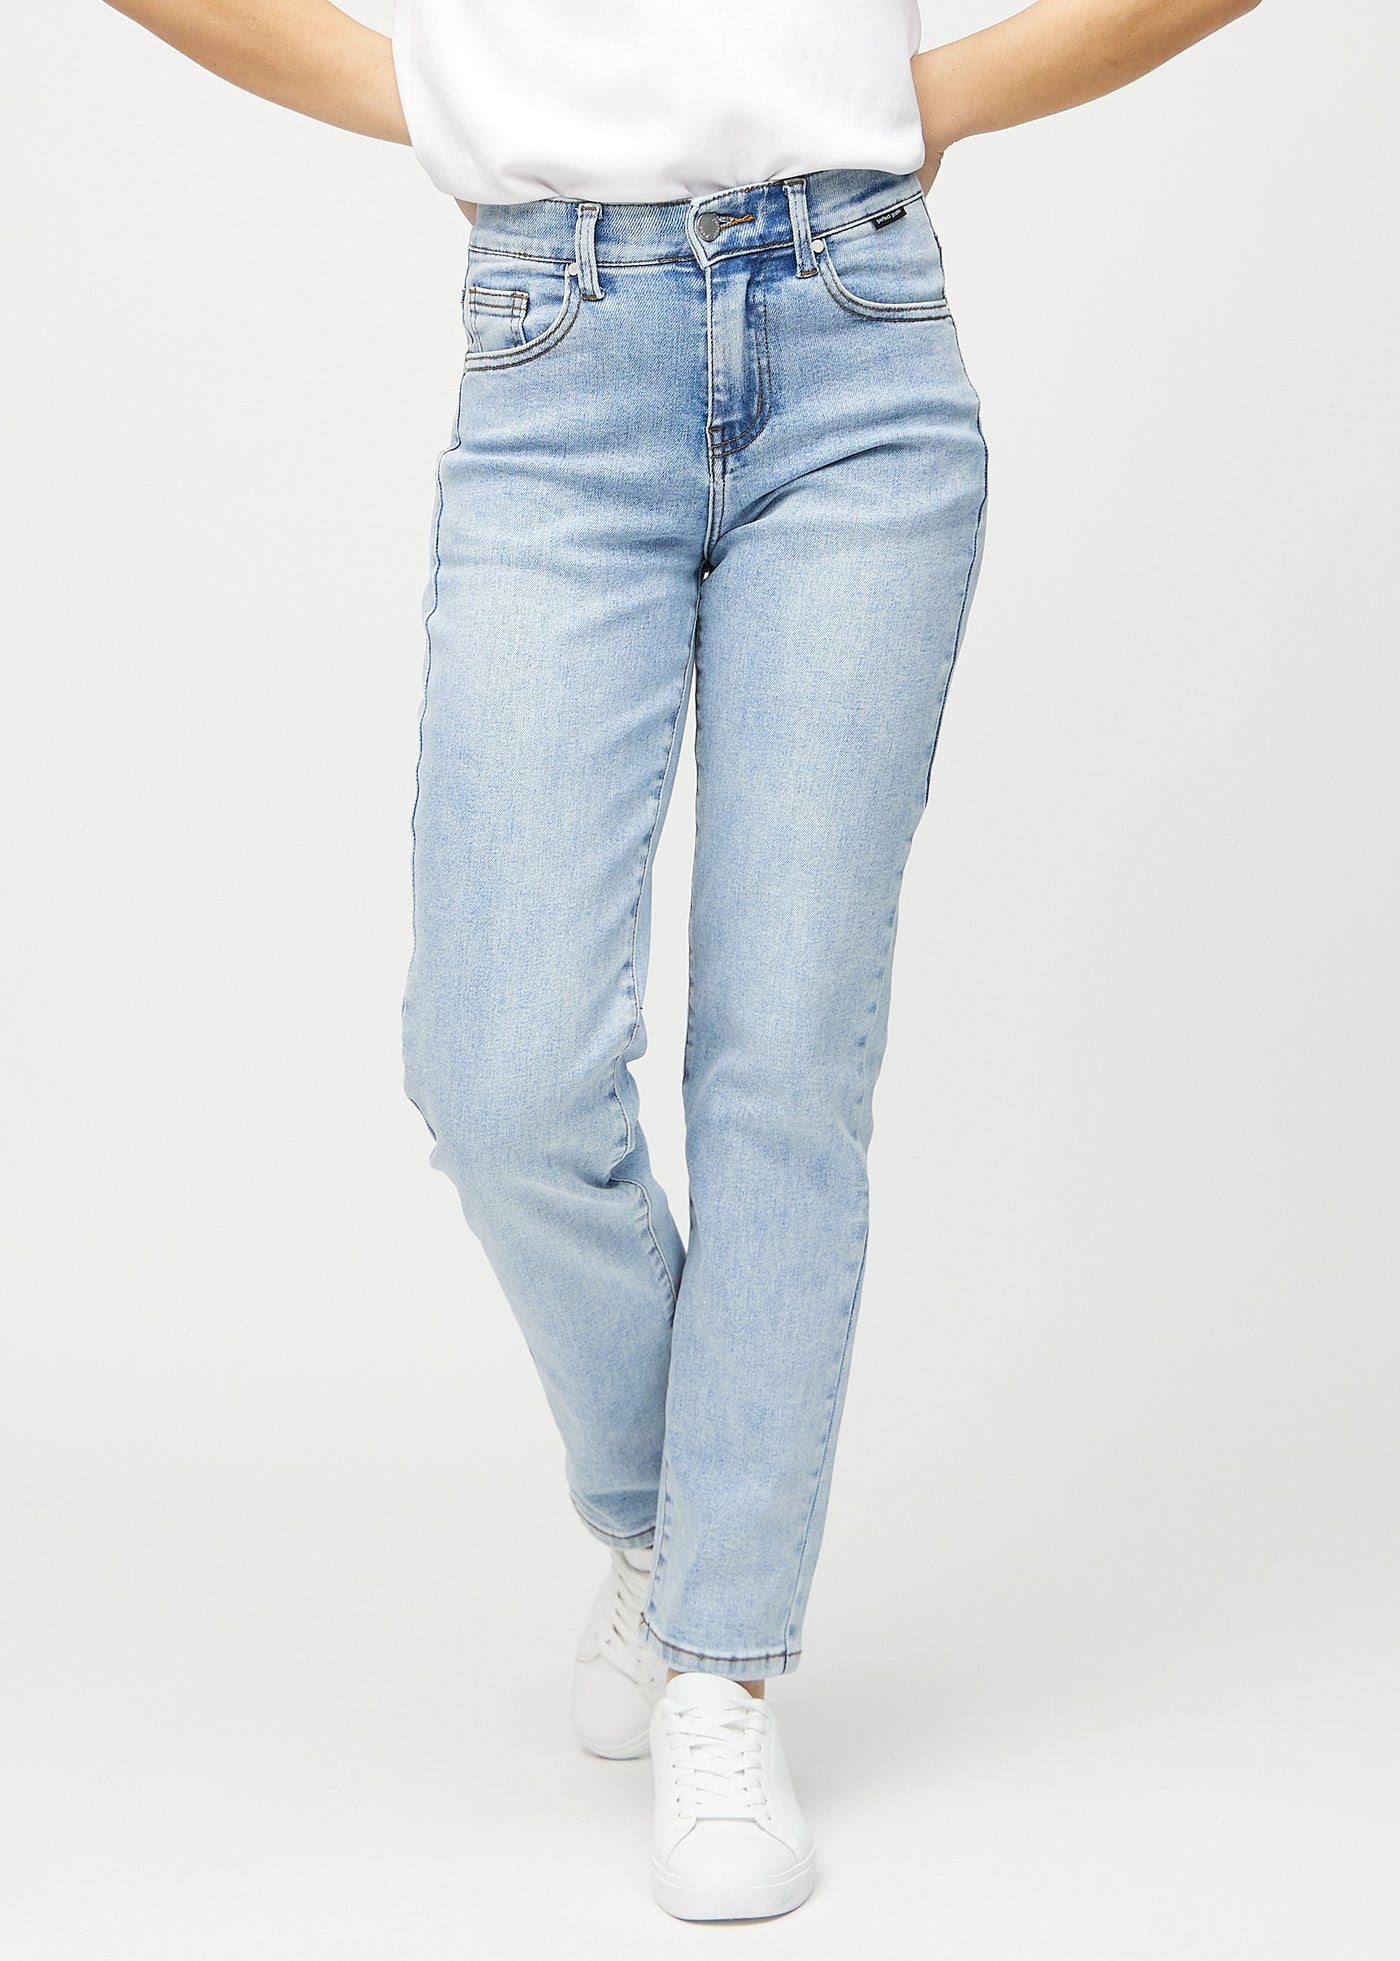 Lys denim regular jeans, modelnavn Waves, som går lige ned langs benet, set forfra.